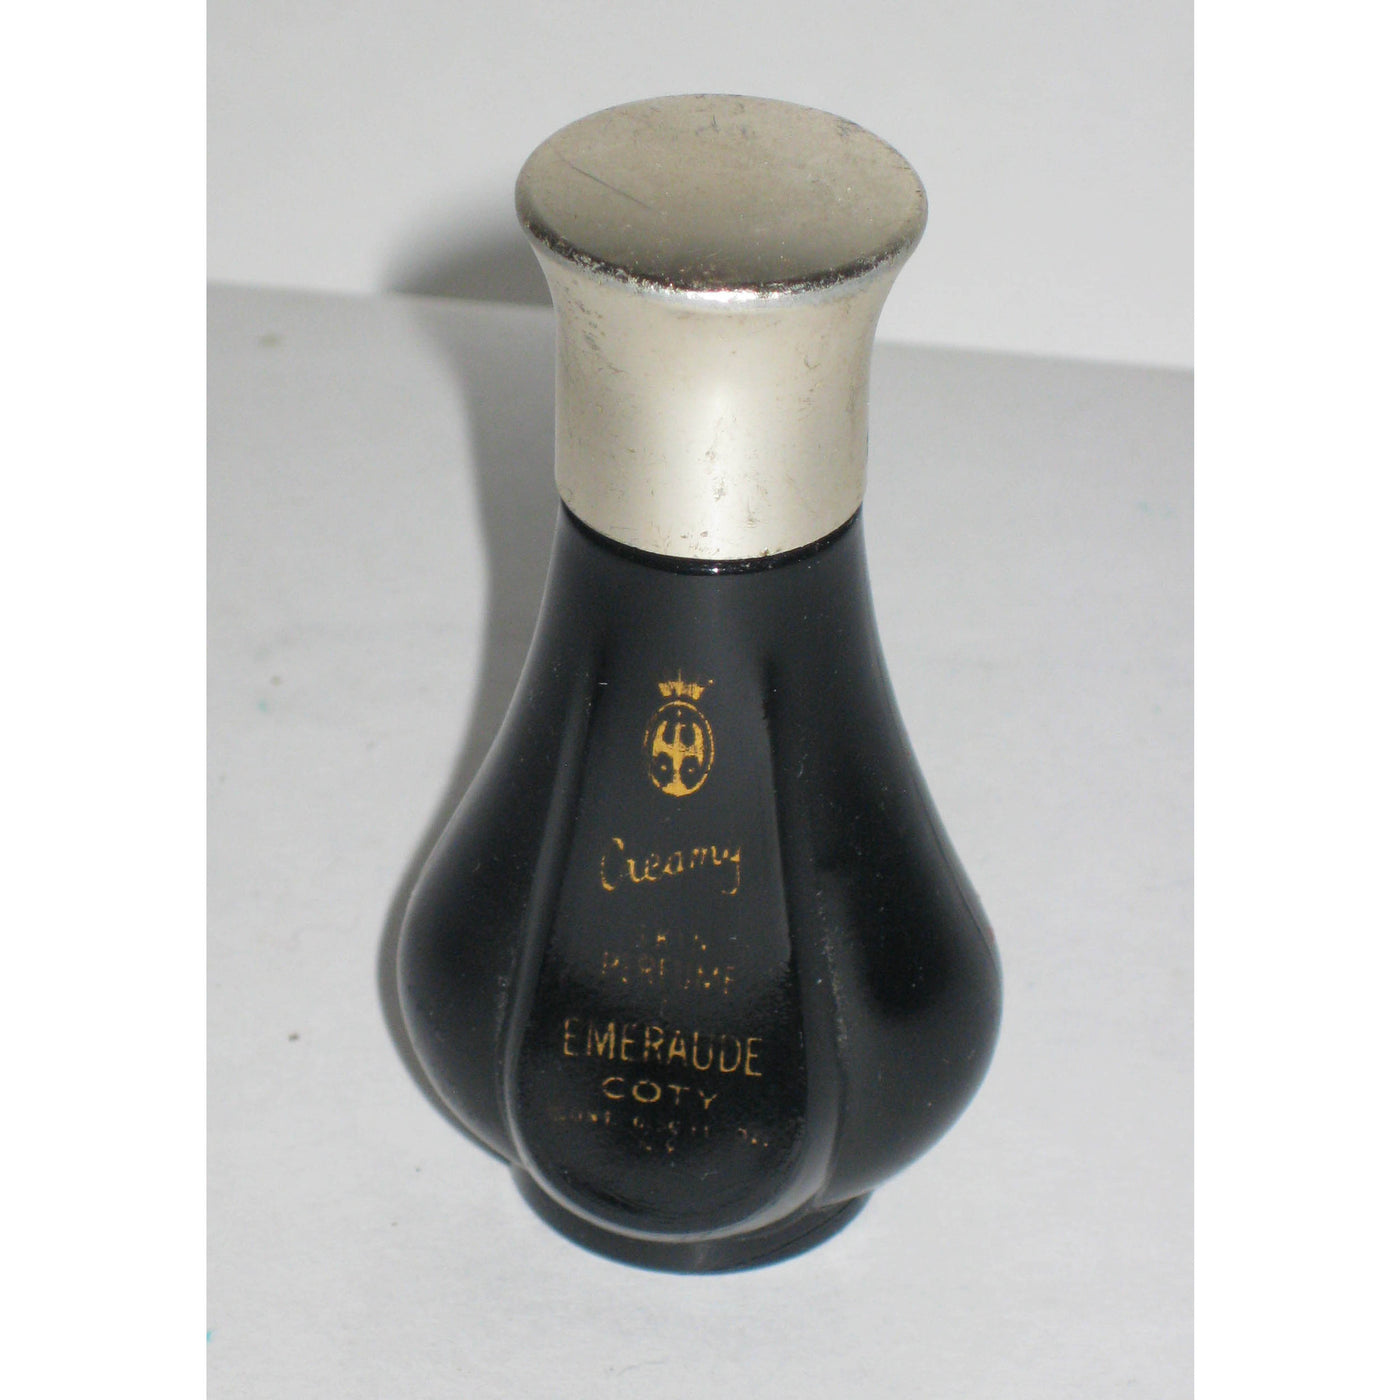 Vintage Coty Emeraude Creamy Perfume